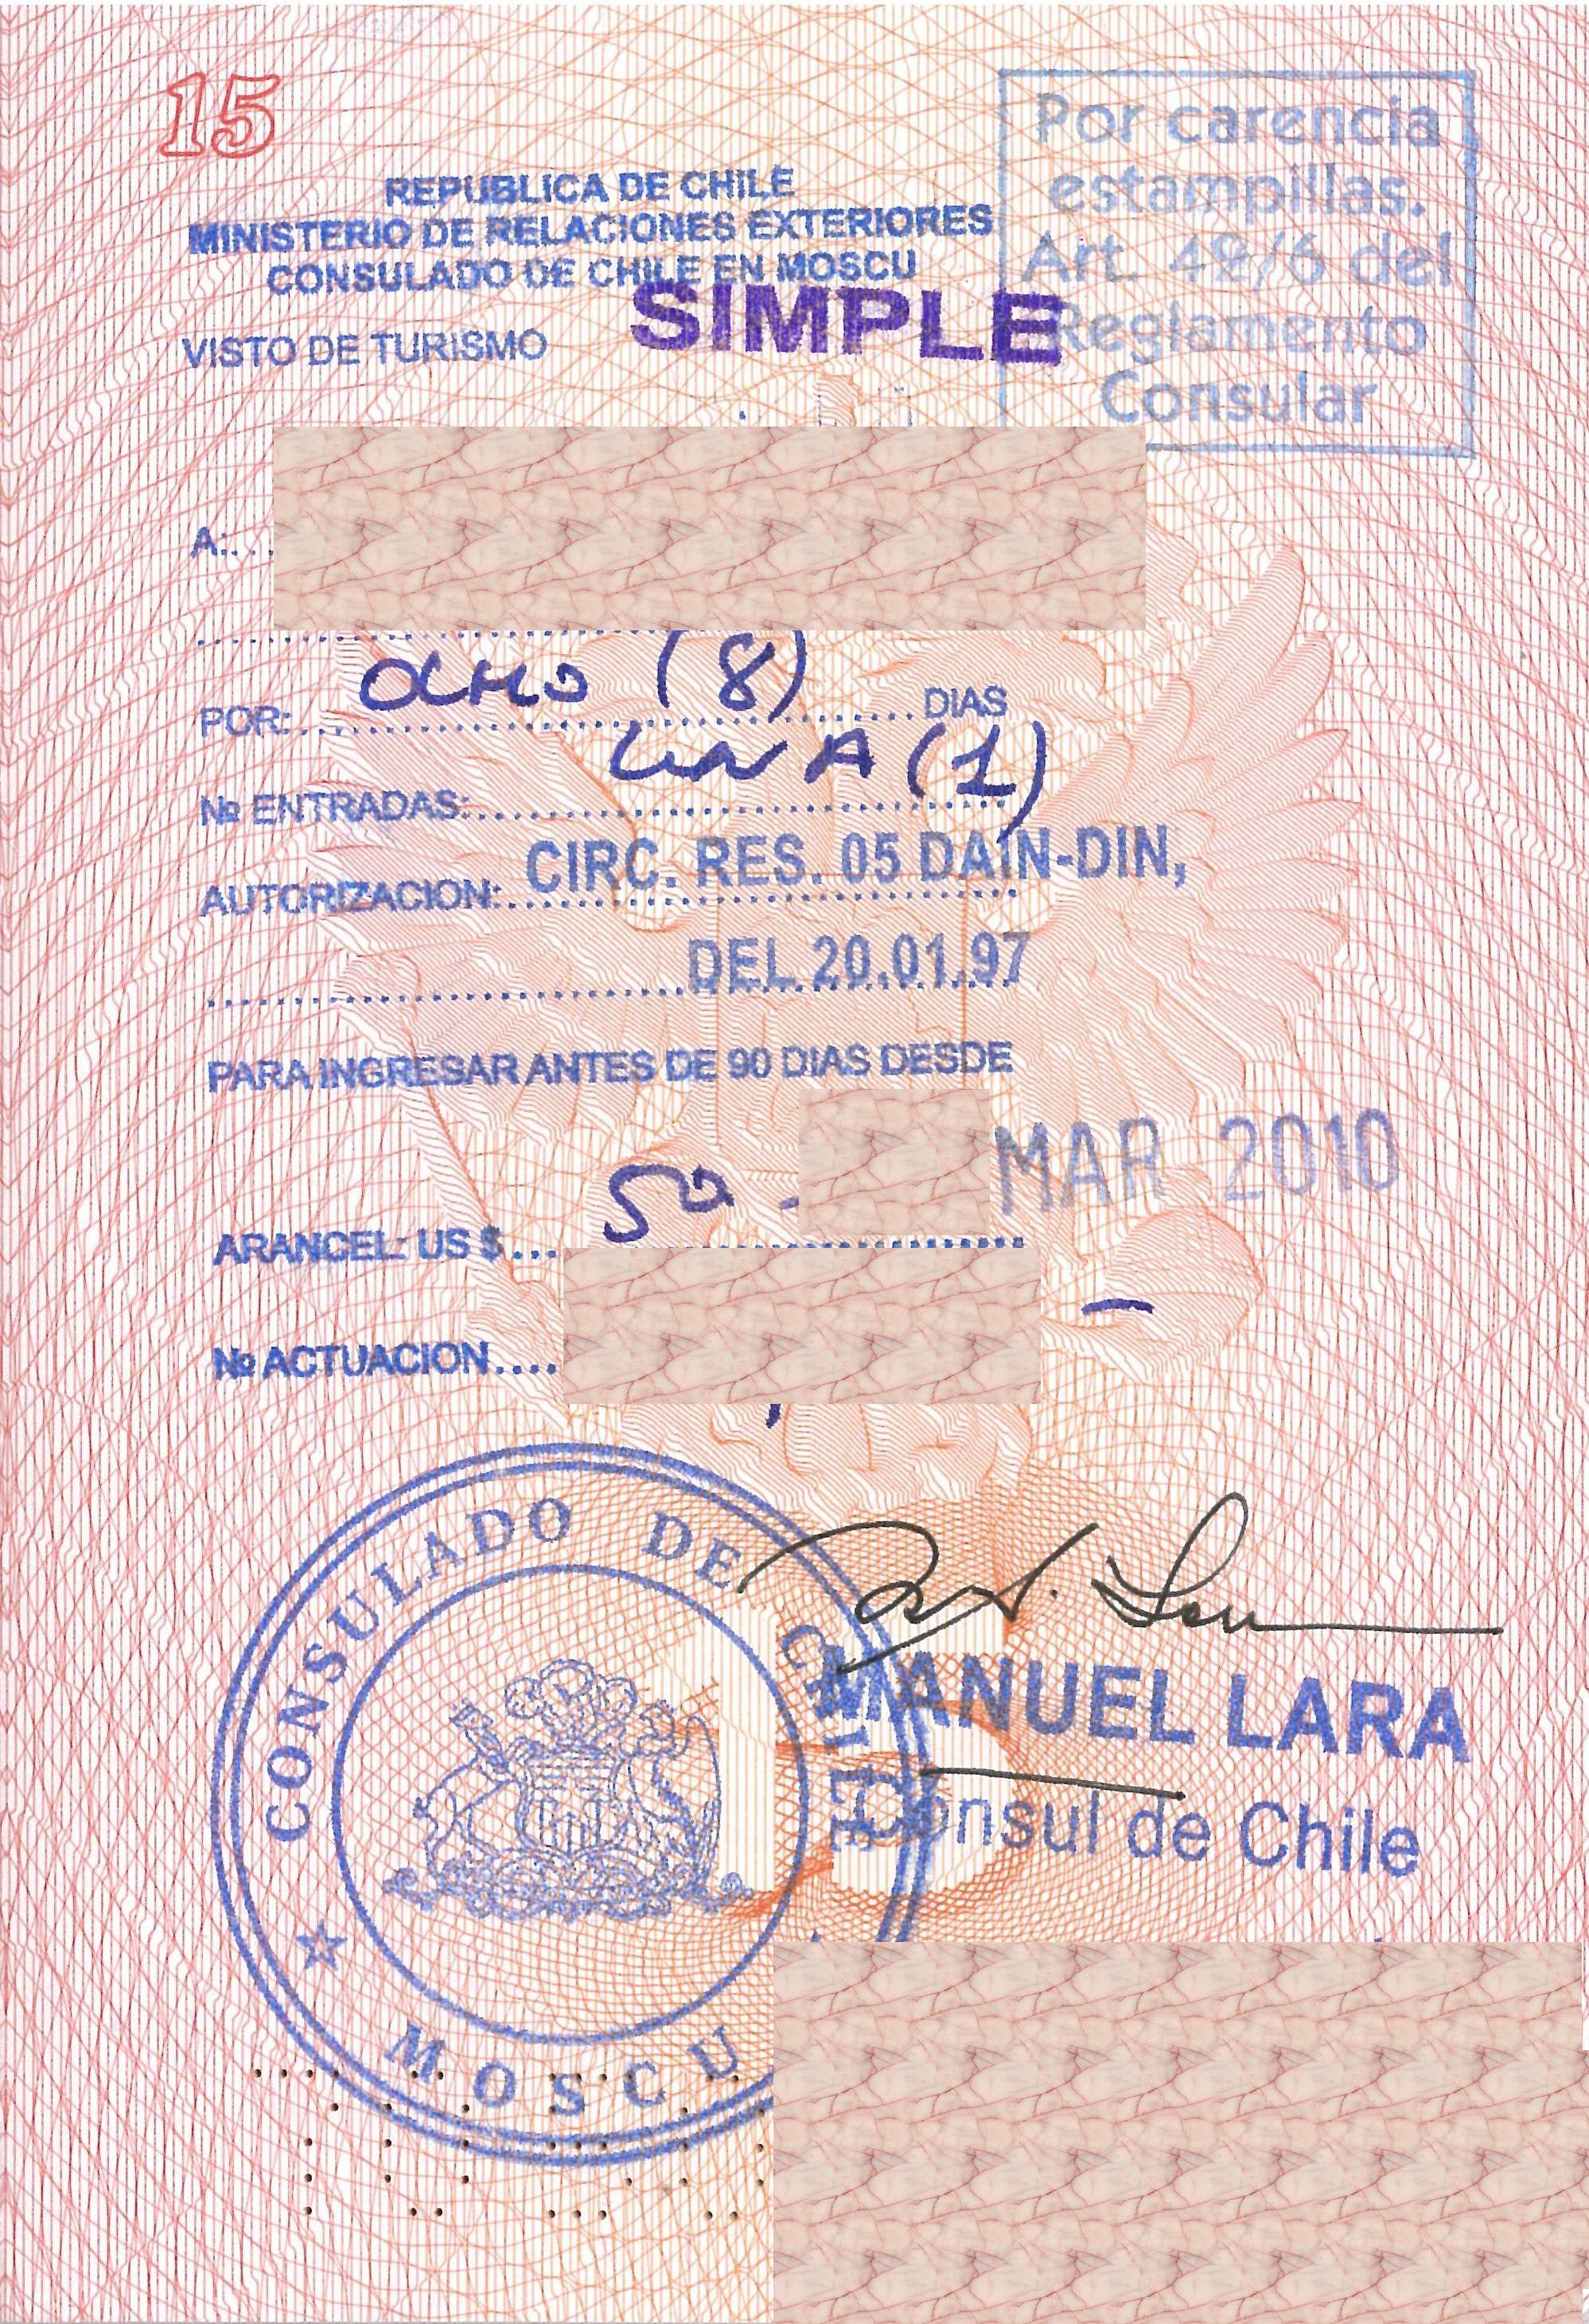 Бизнес-иммиграция в чили